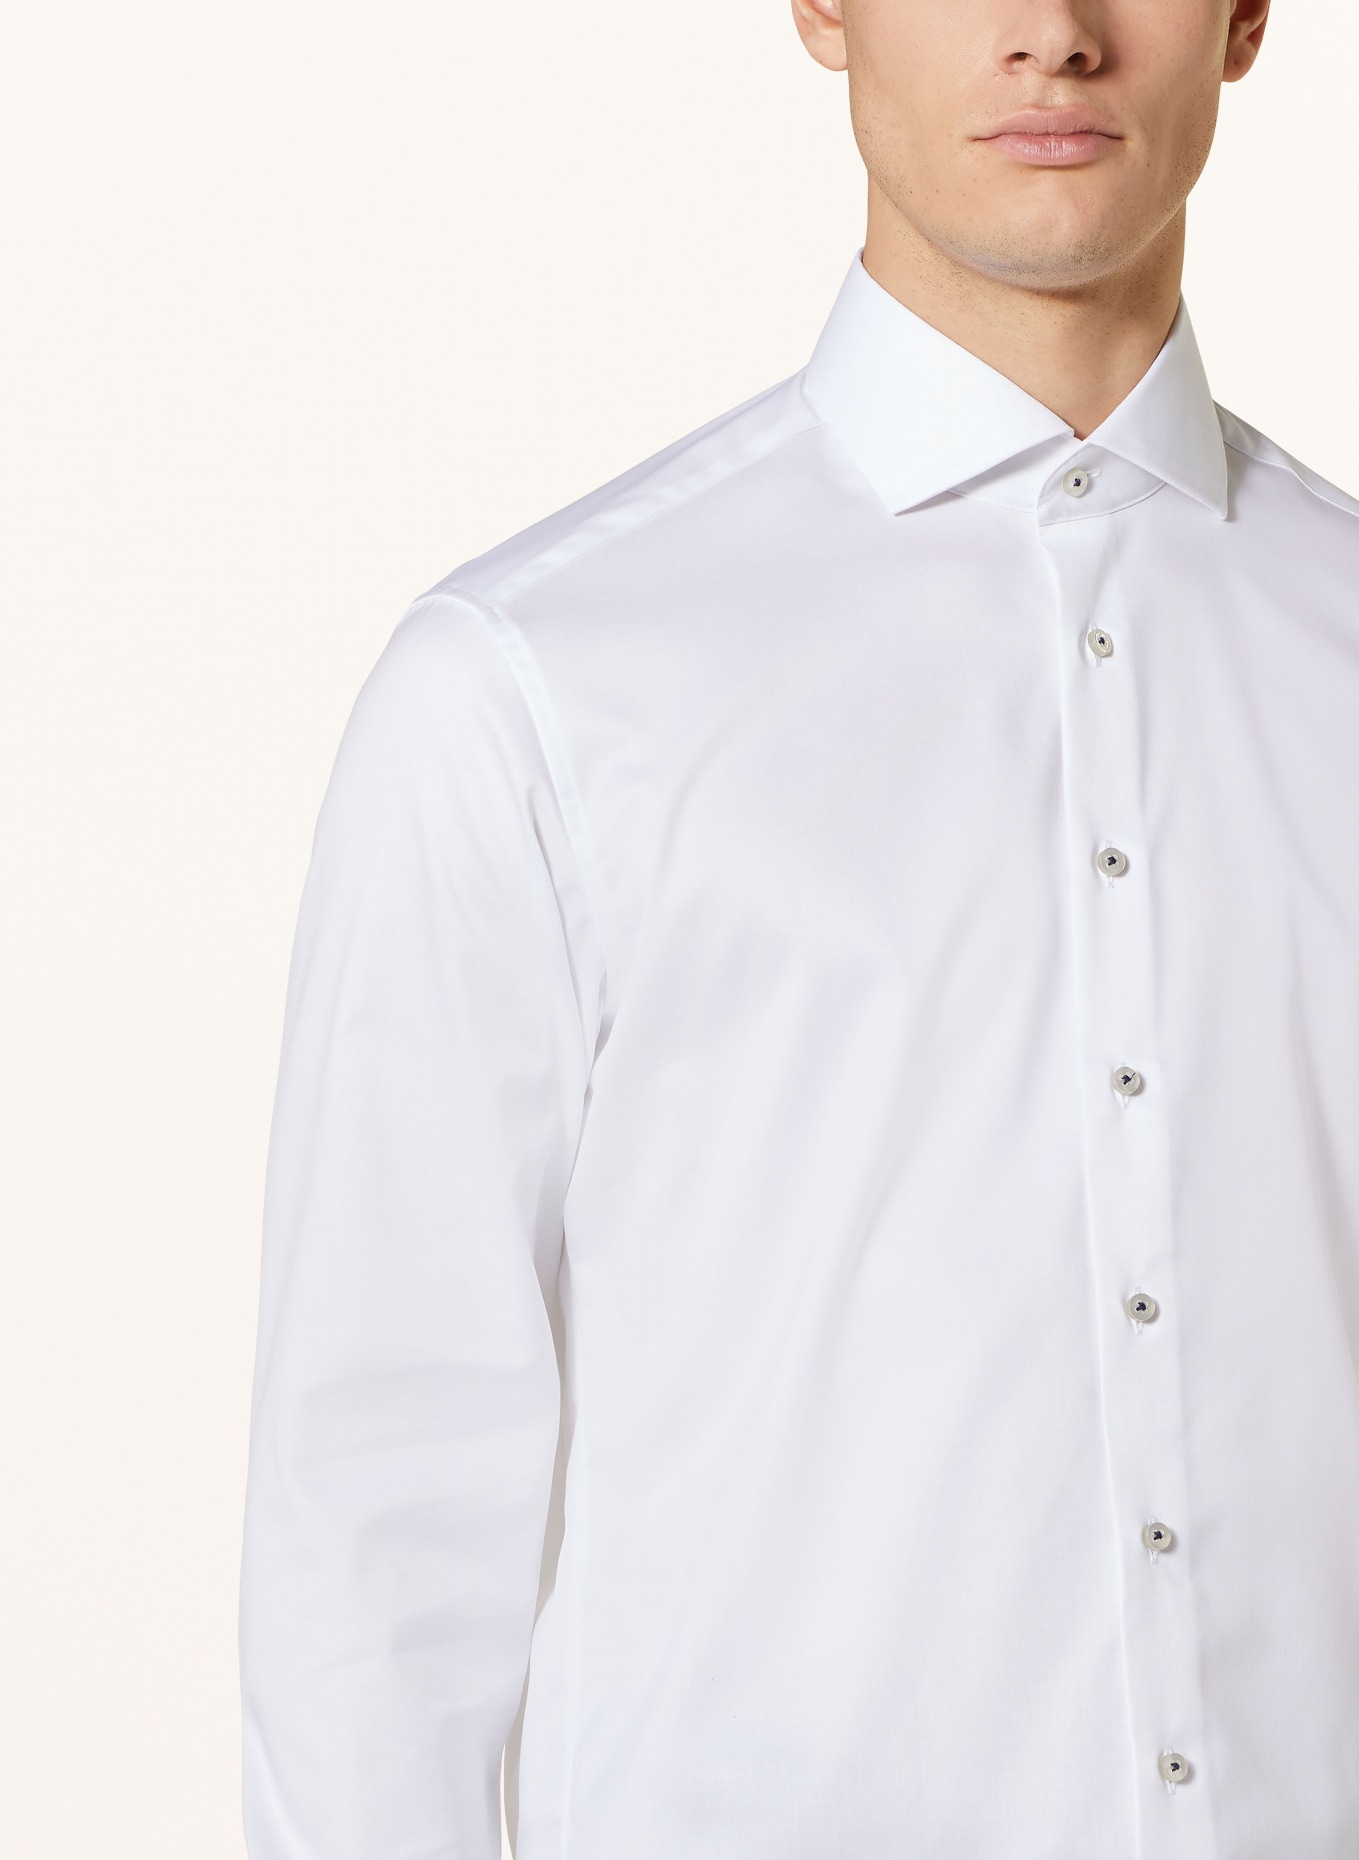 ETERNA 1863 Shirt white fit in modern